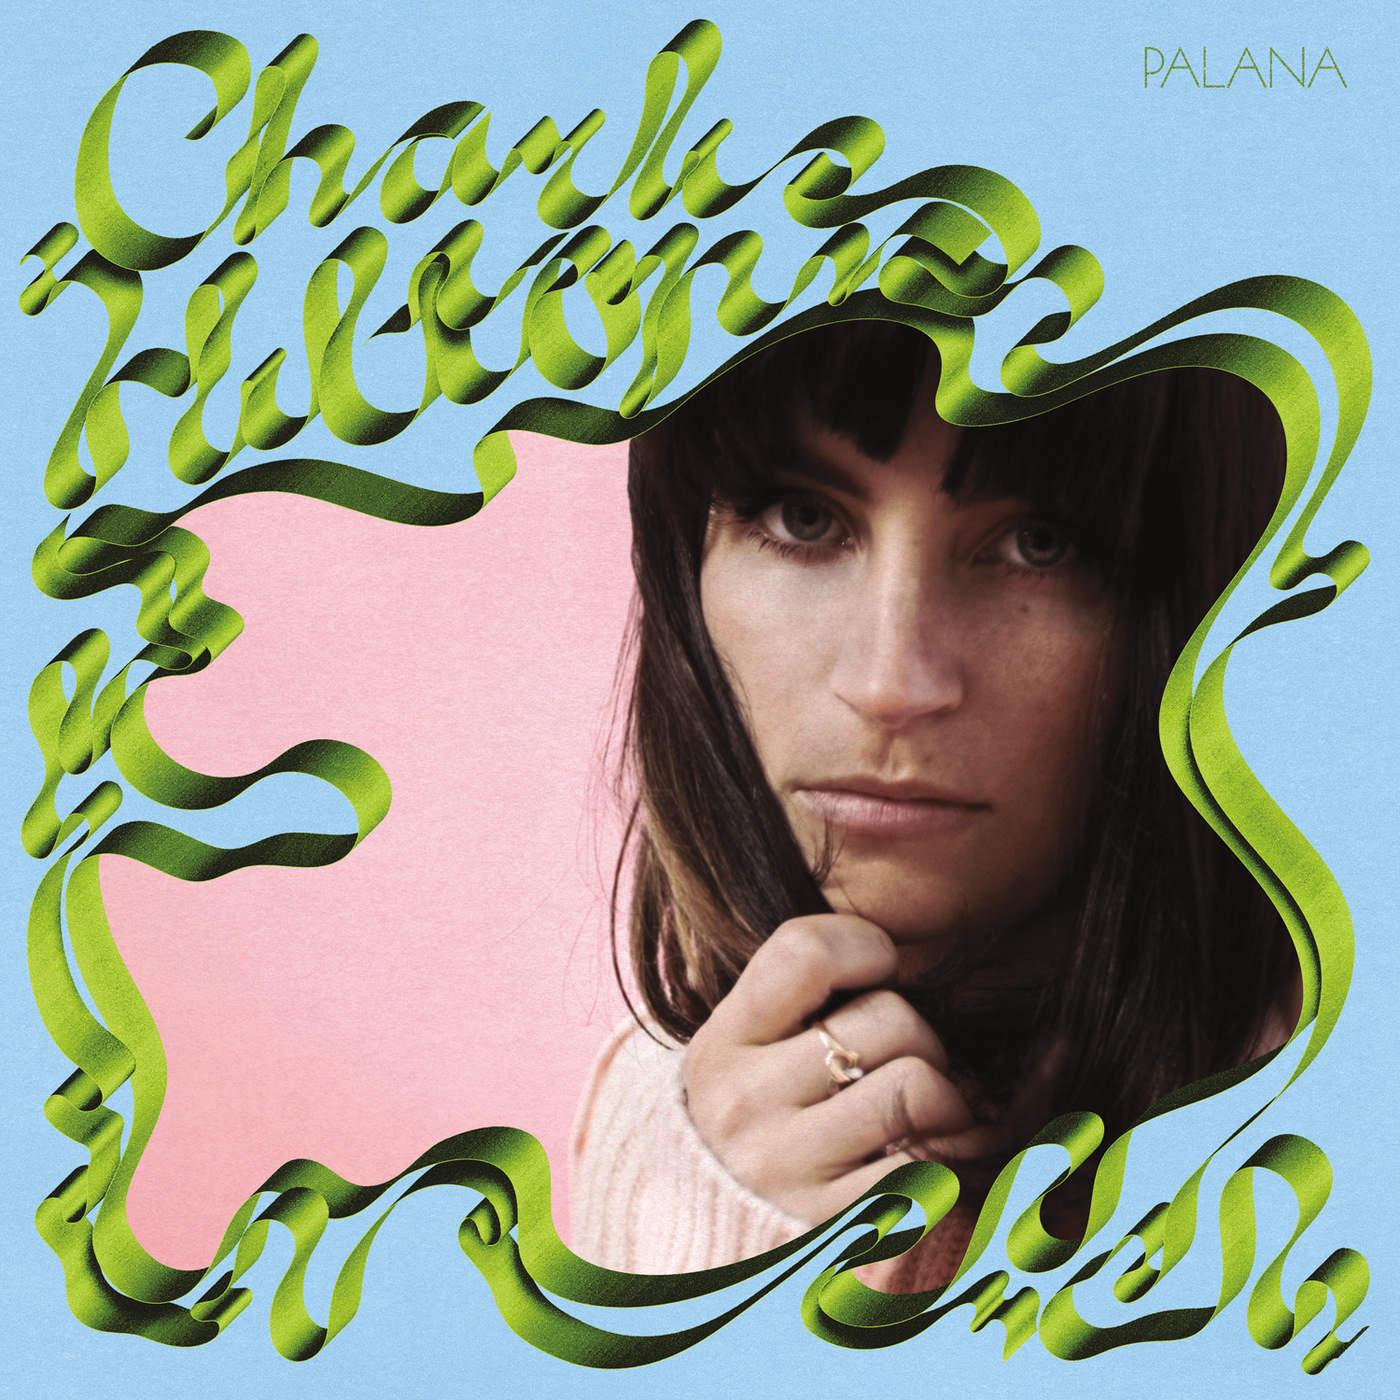 Album Review: “Palana” by Charlie Hilton